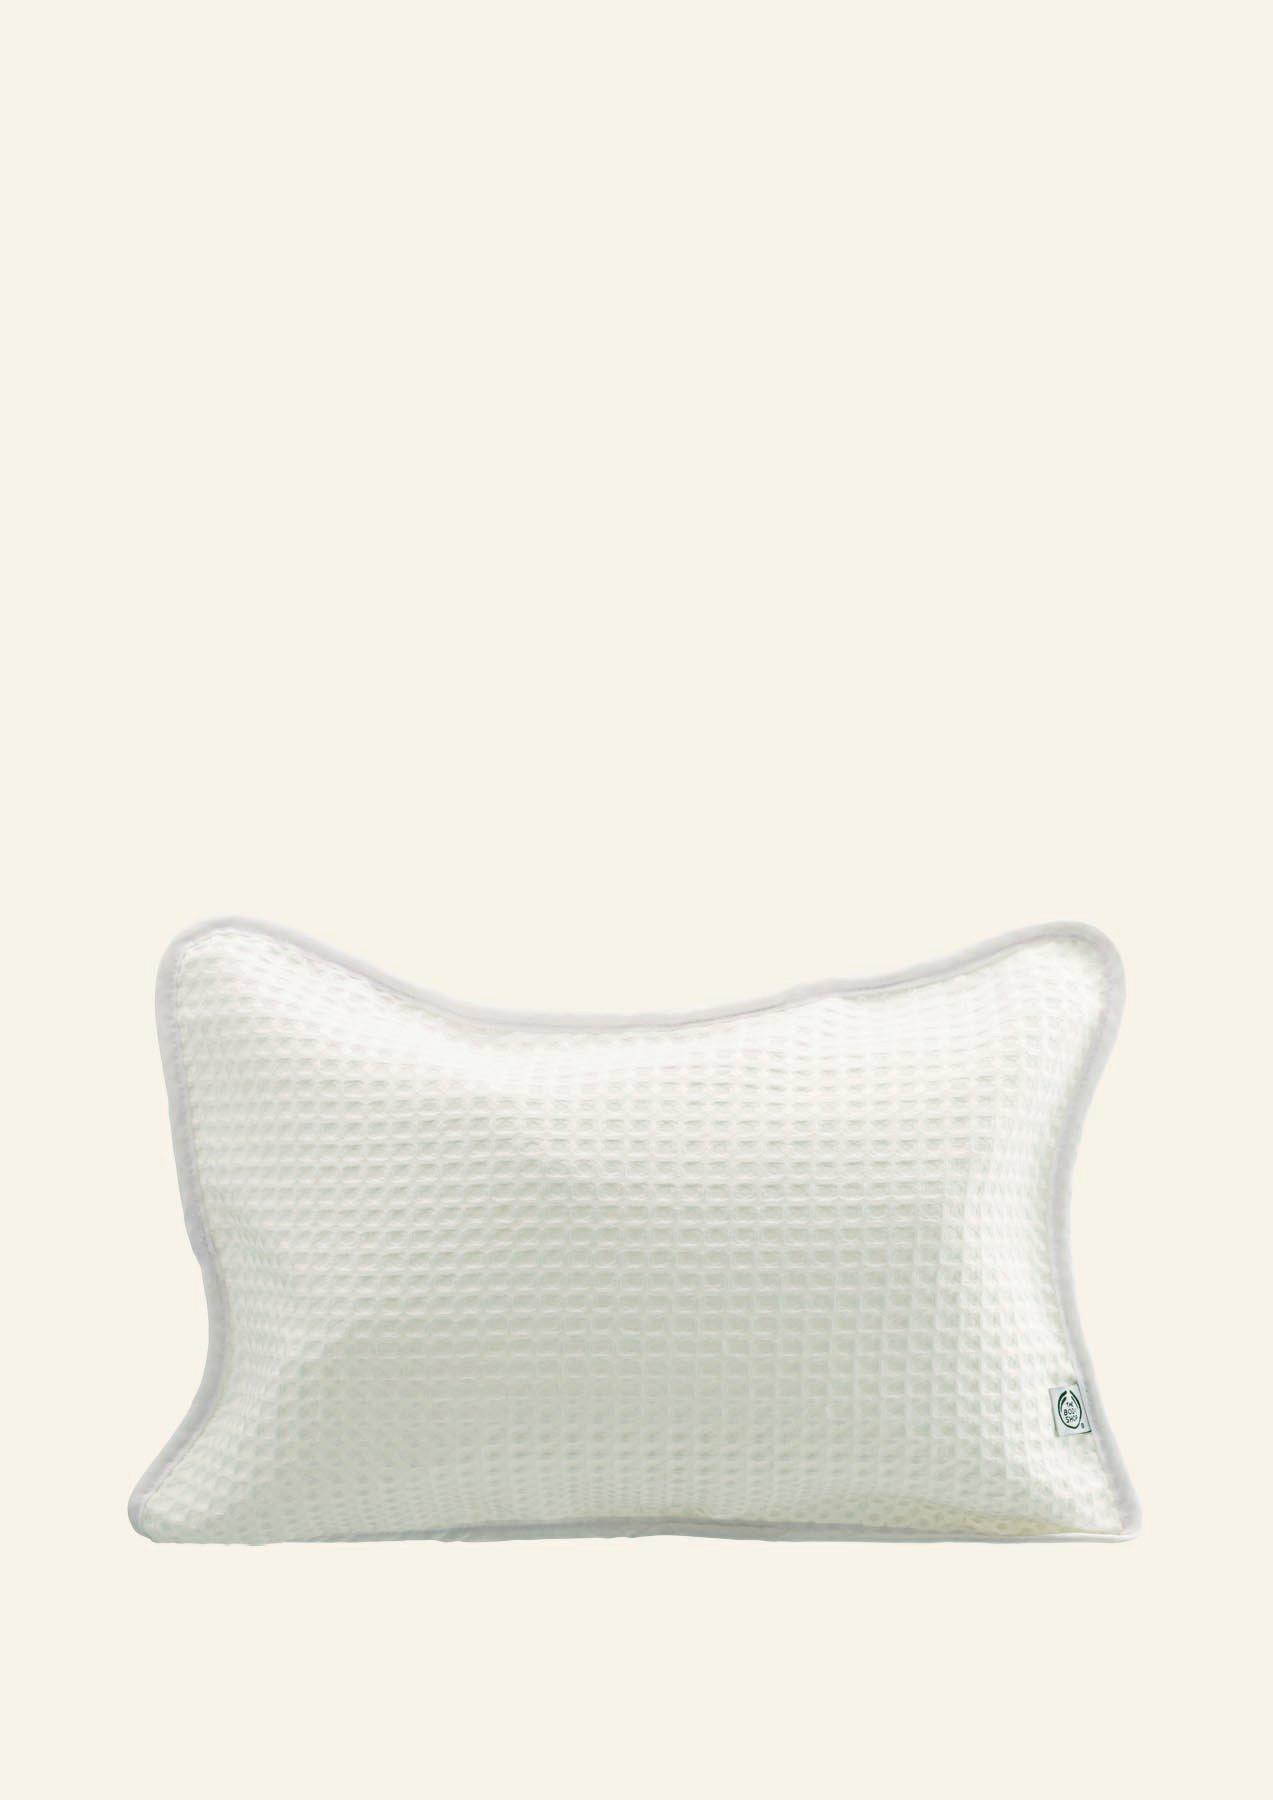 Bath Pillow - Inflatable: White